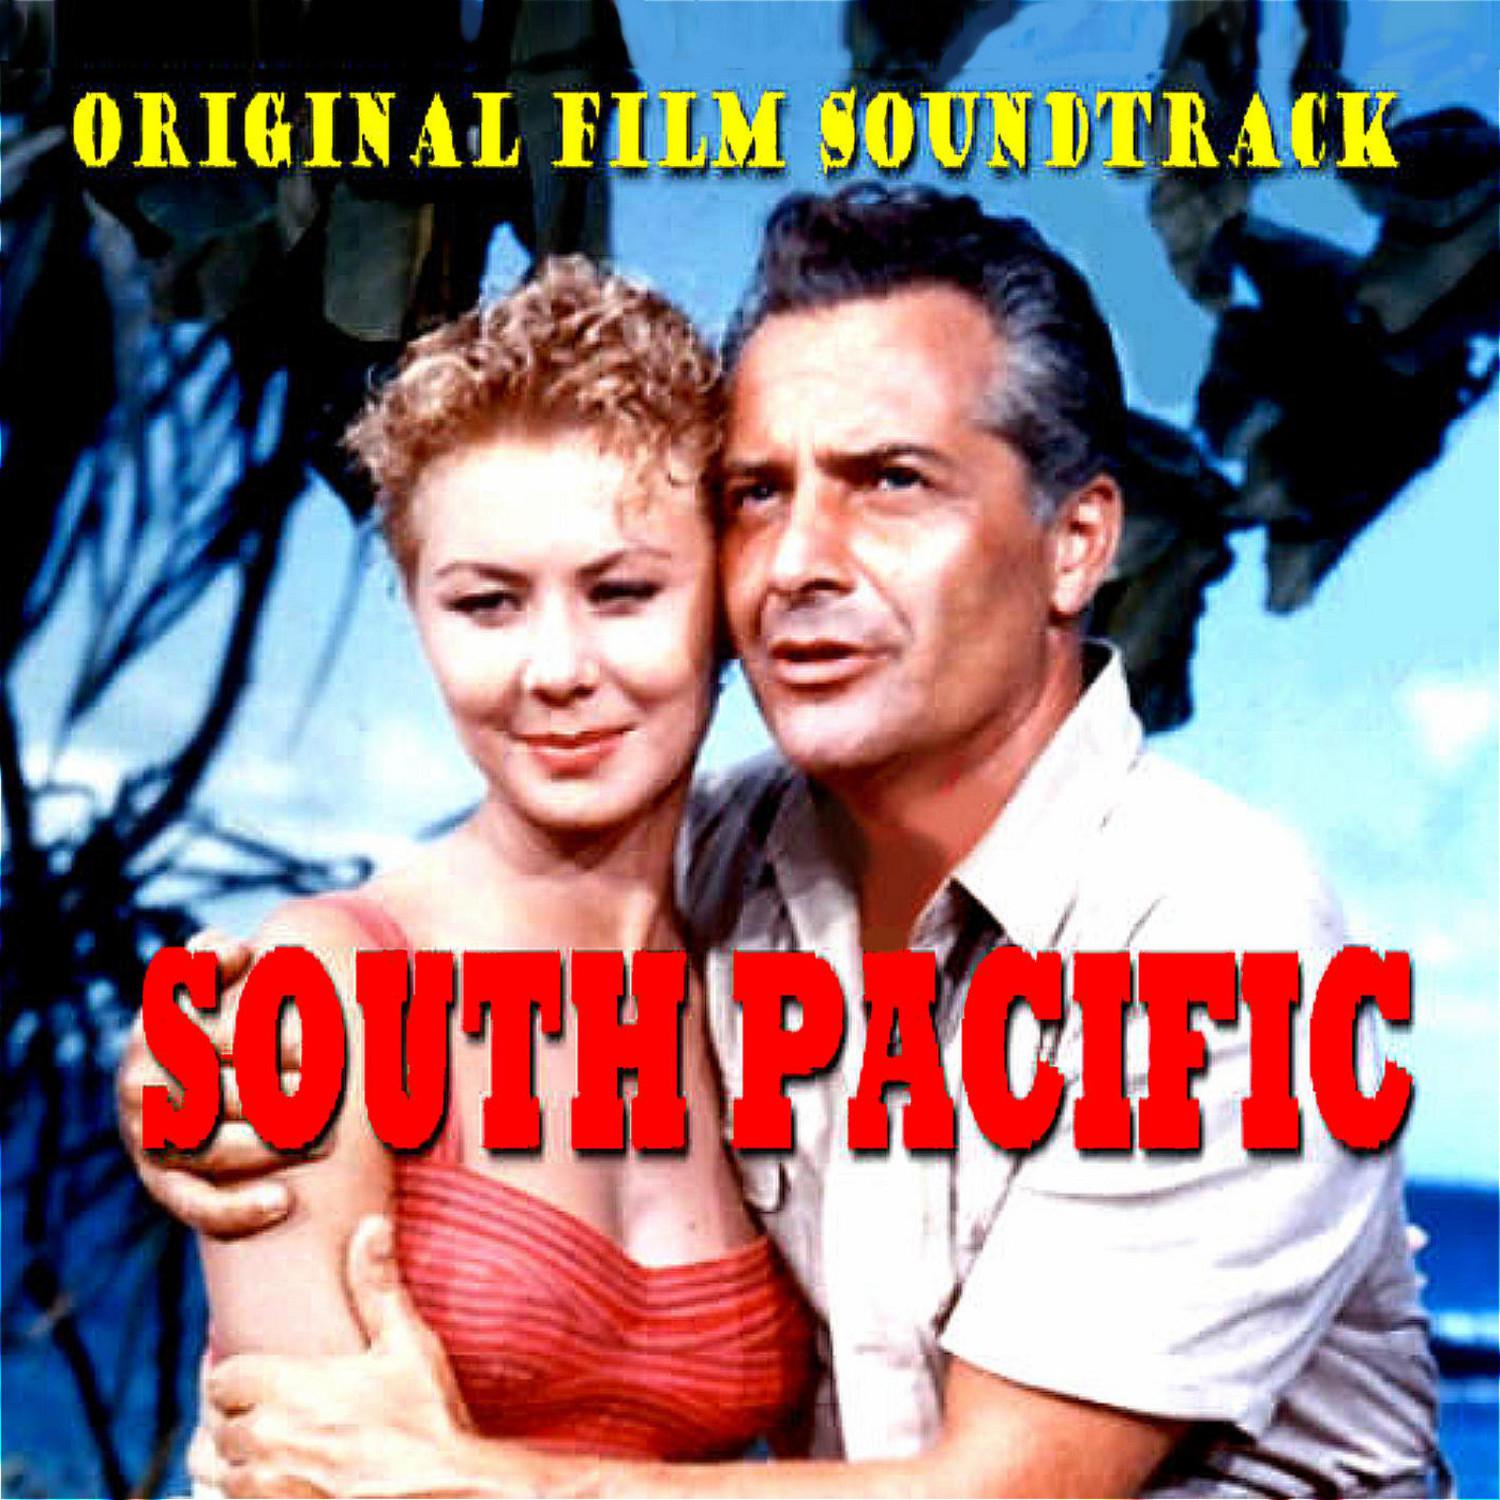 South Pacific The Original Film Soundtrack